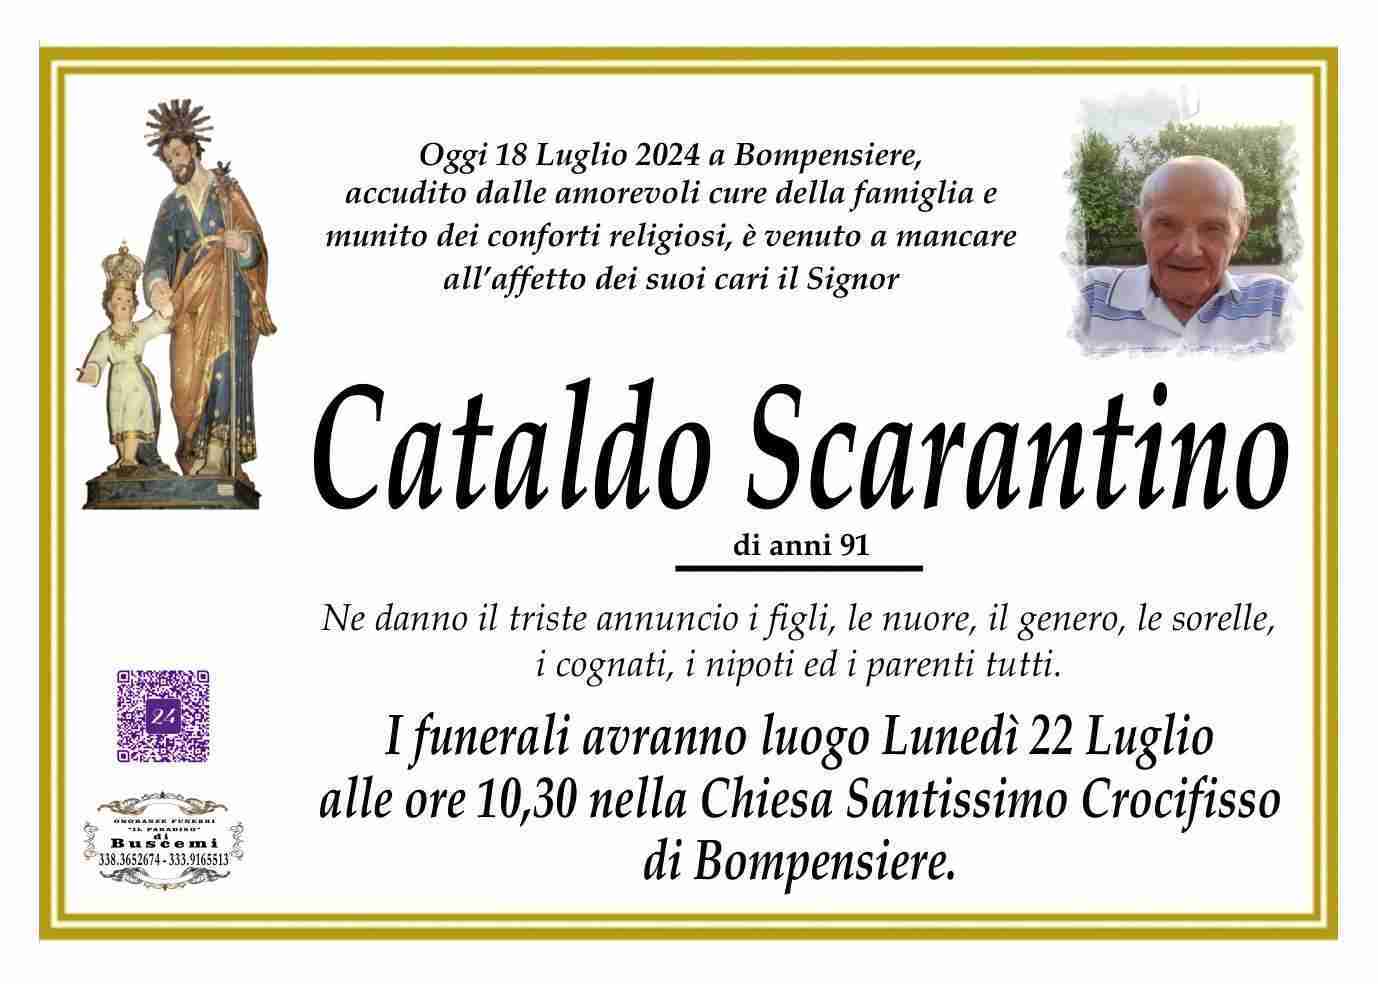 Cataldo Scarantino